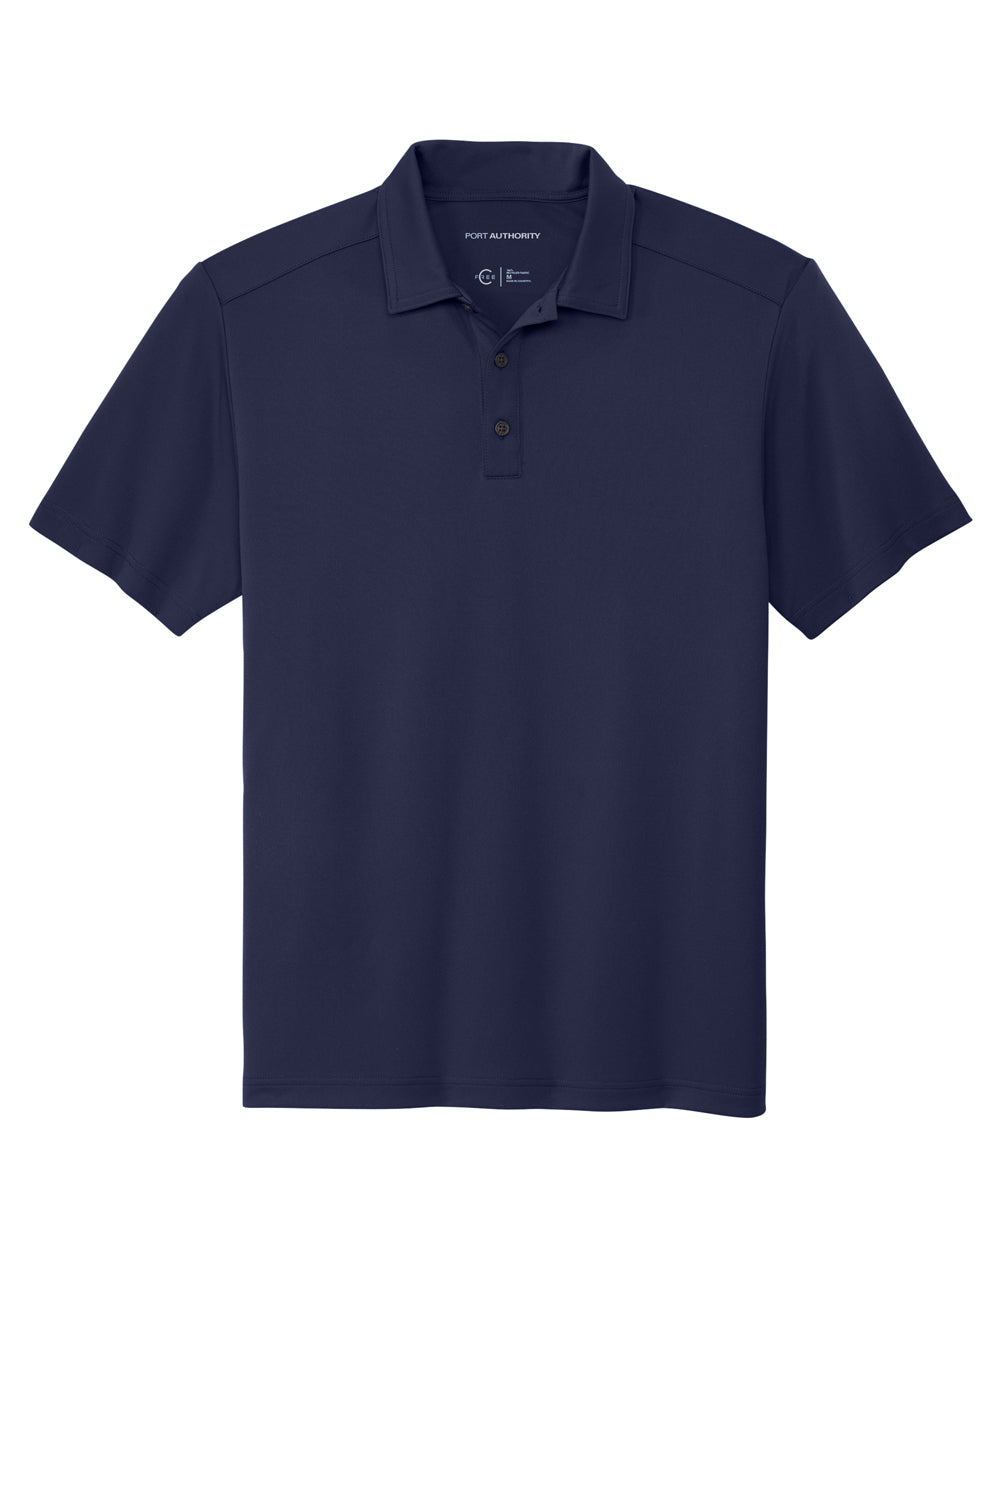 Port Authority K864 C-Free Performance Short Sleeve Polo Shirt True Navy Blue Flat Front